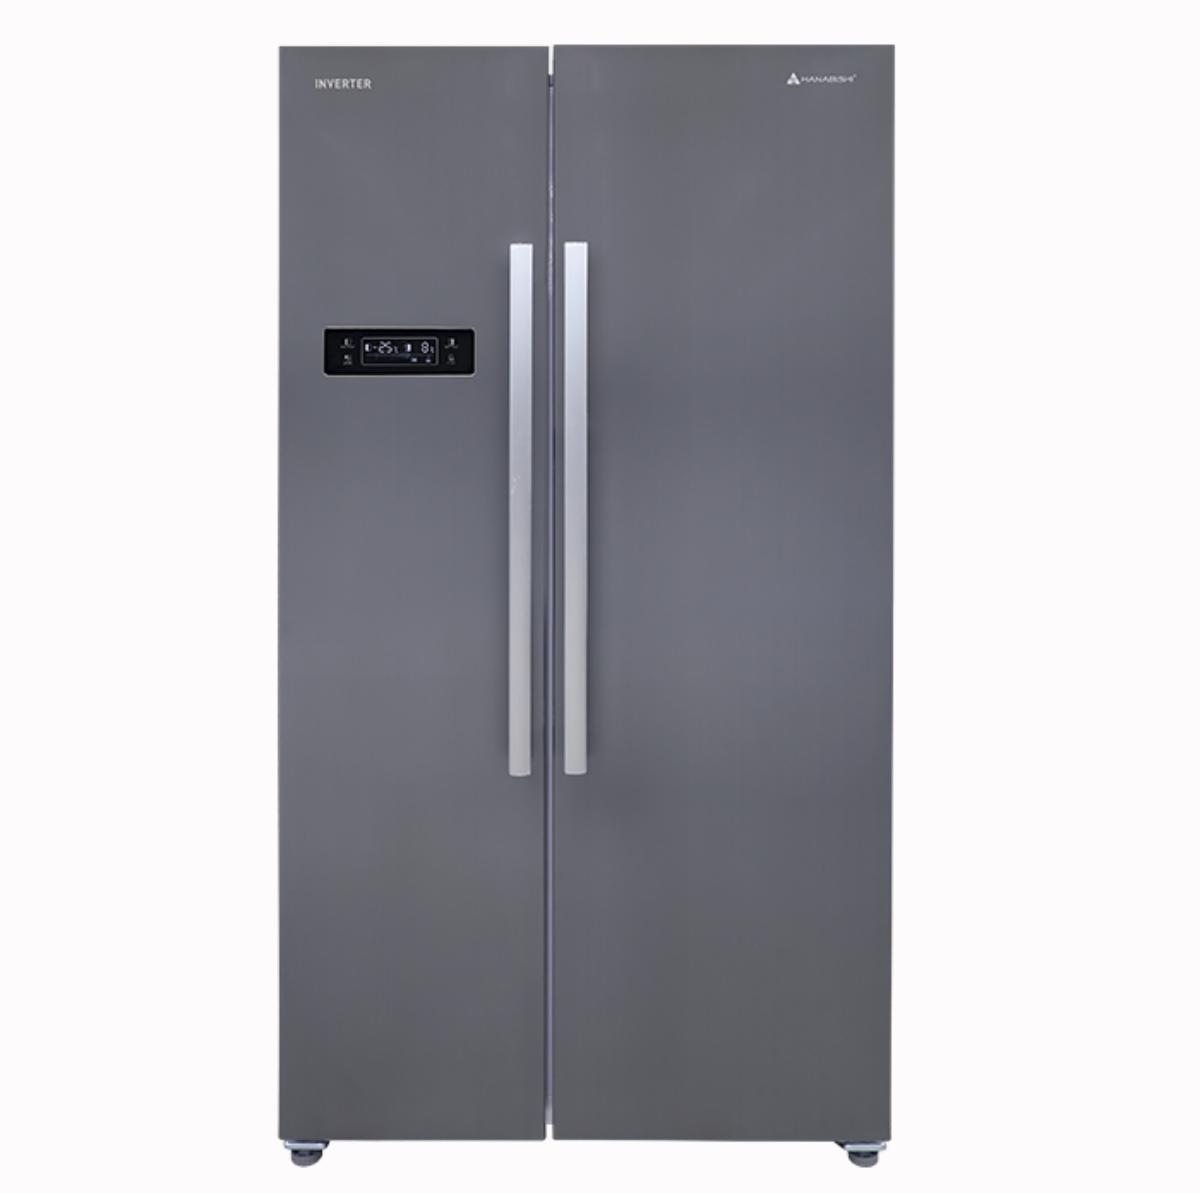 Large Capacity Refrigerator